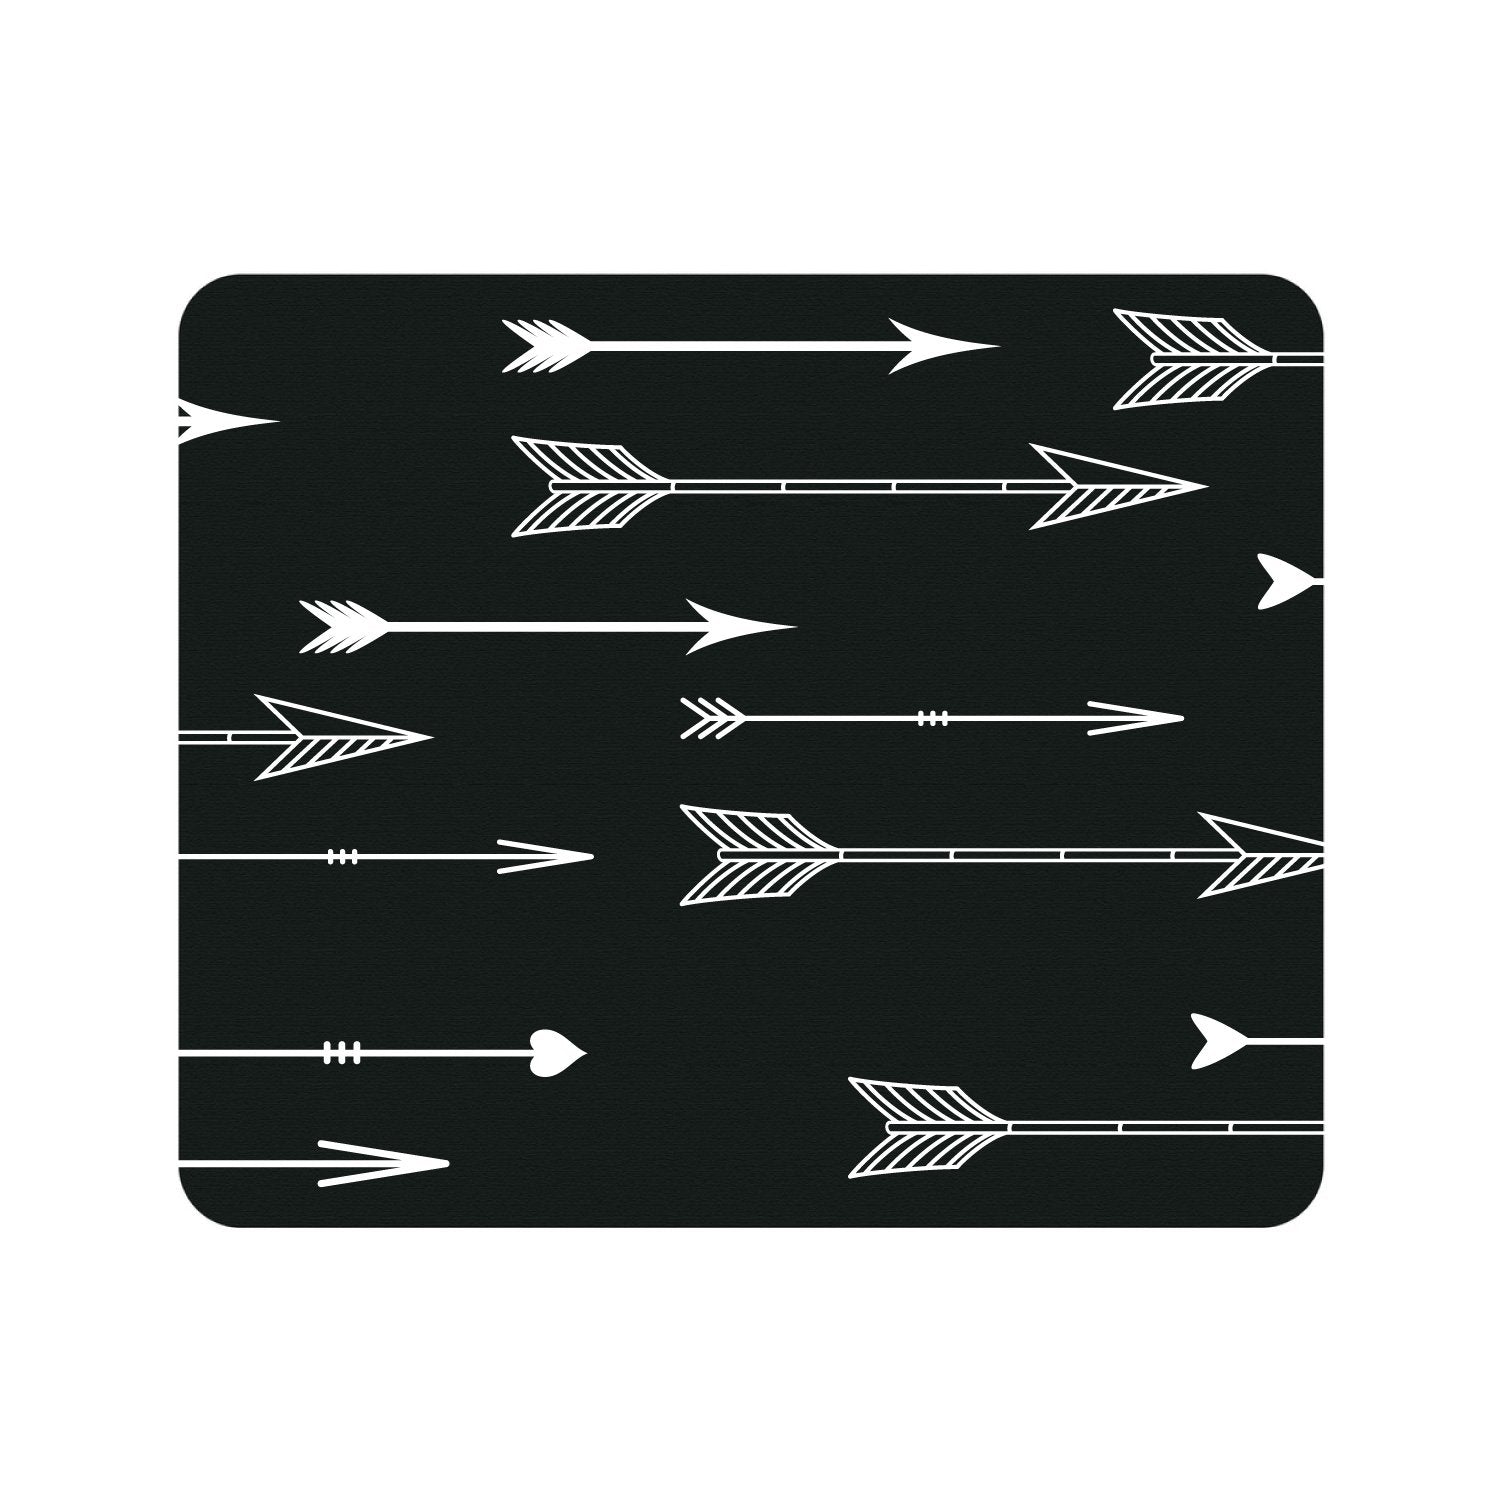 OTM Prints Black Mouse Pad, Flying Arrows White